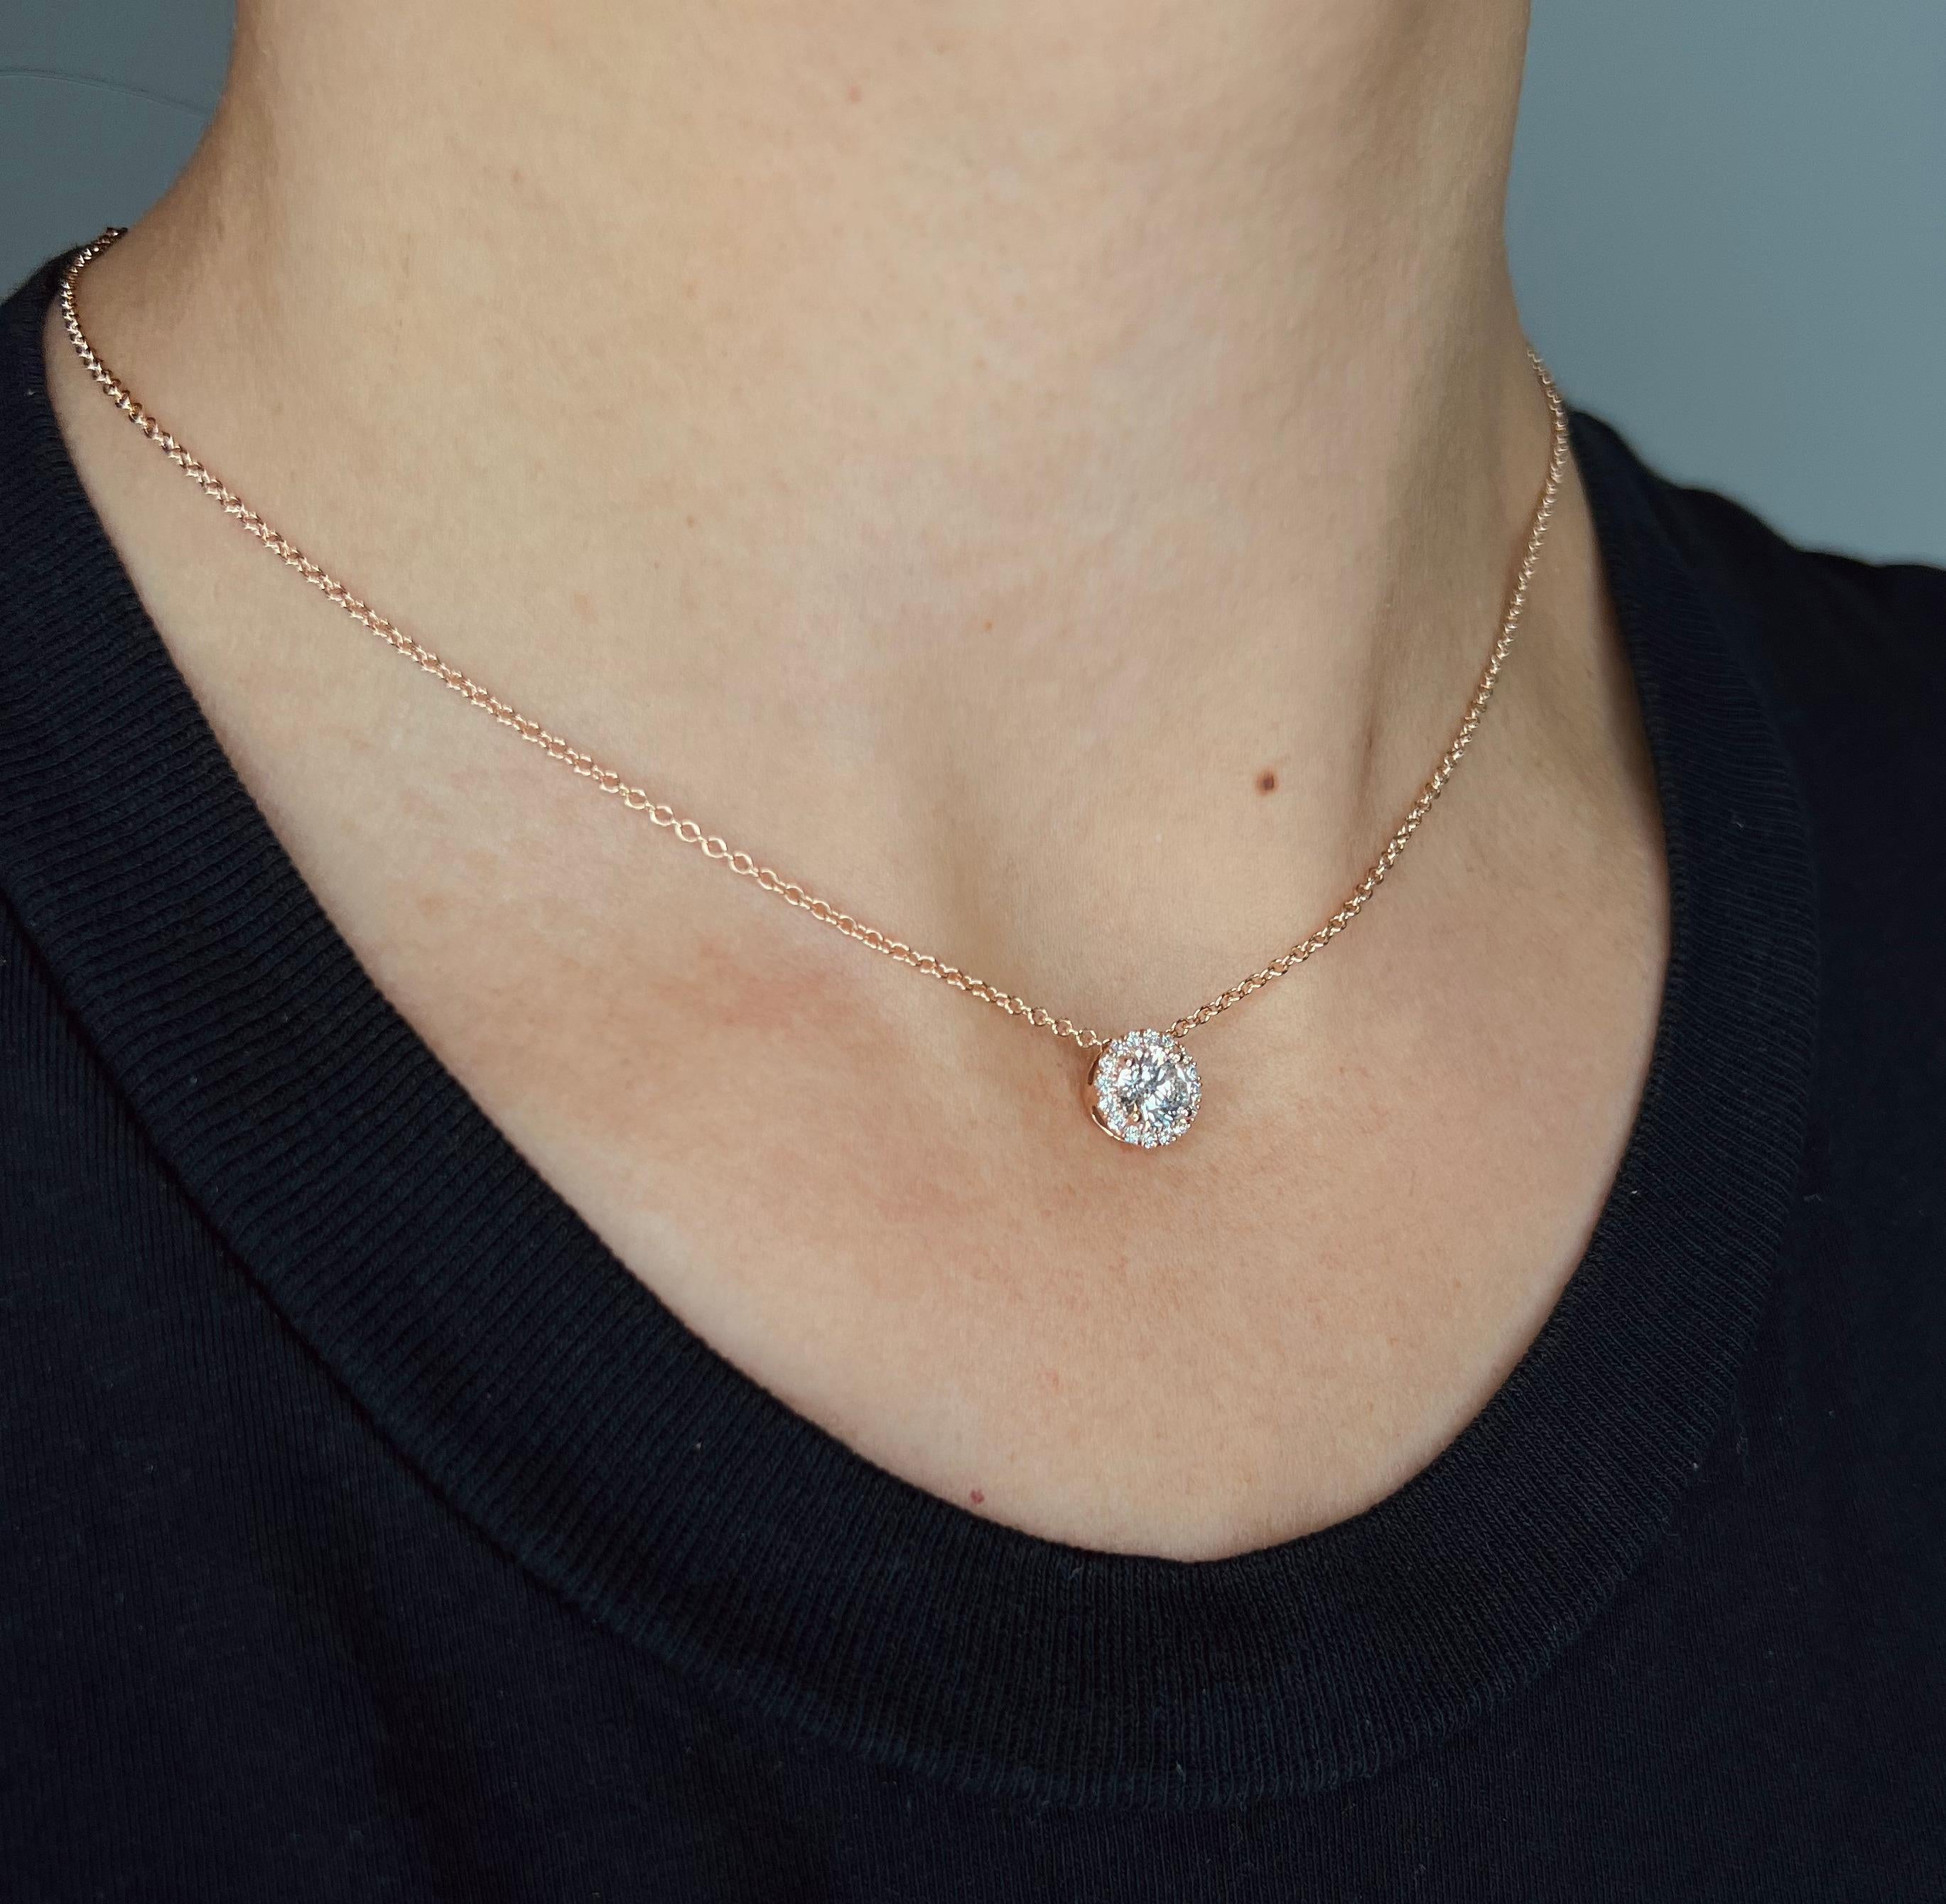 Women's or Men's 14k White Gold 0.65 Carat Round Cut Diamond Solitaire Pendant Necklace For Sale